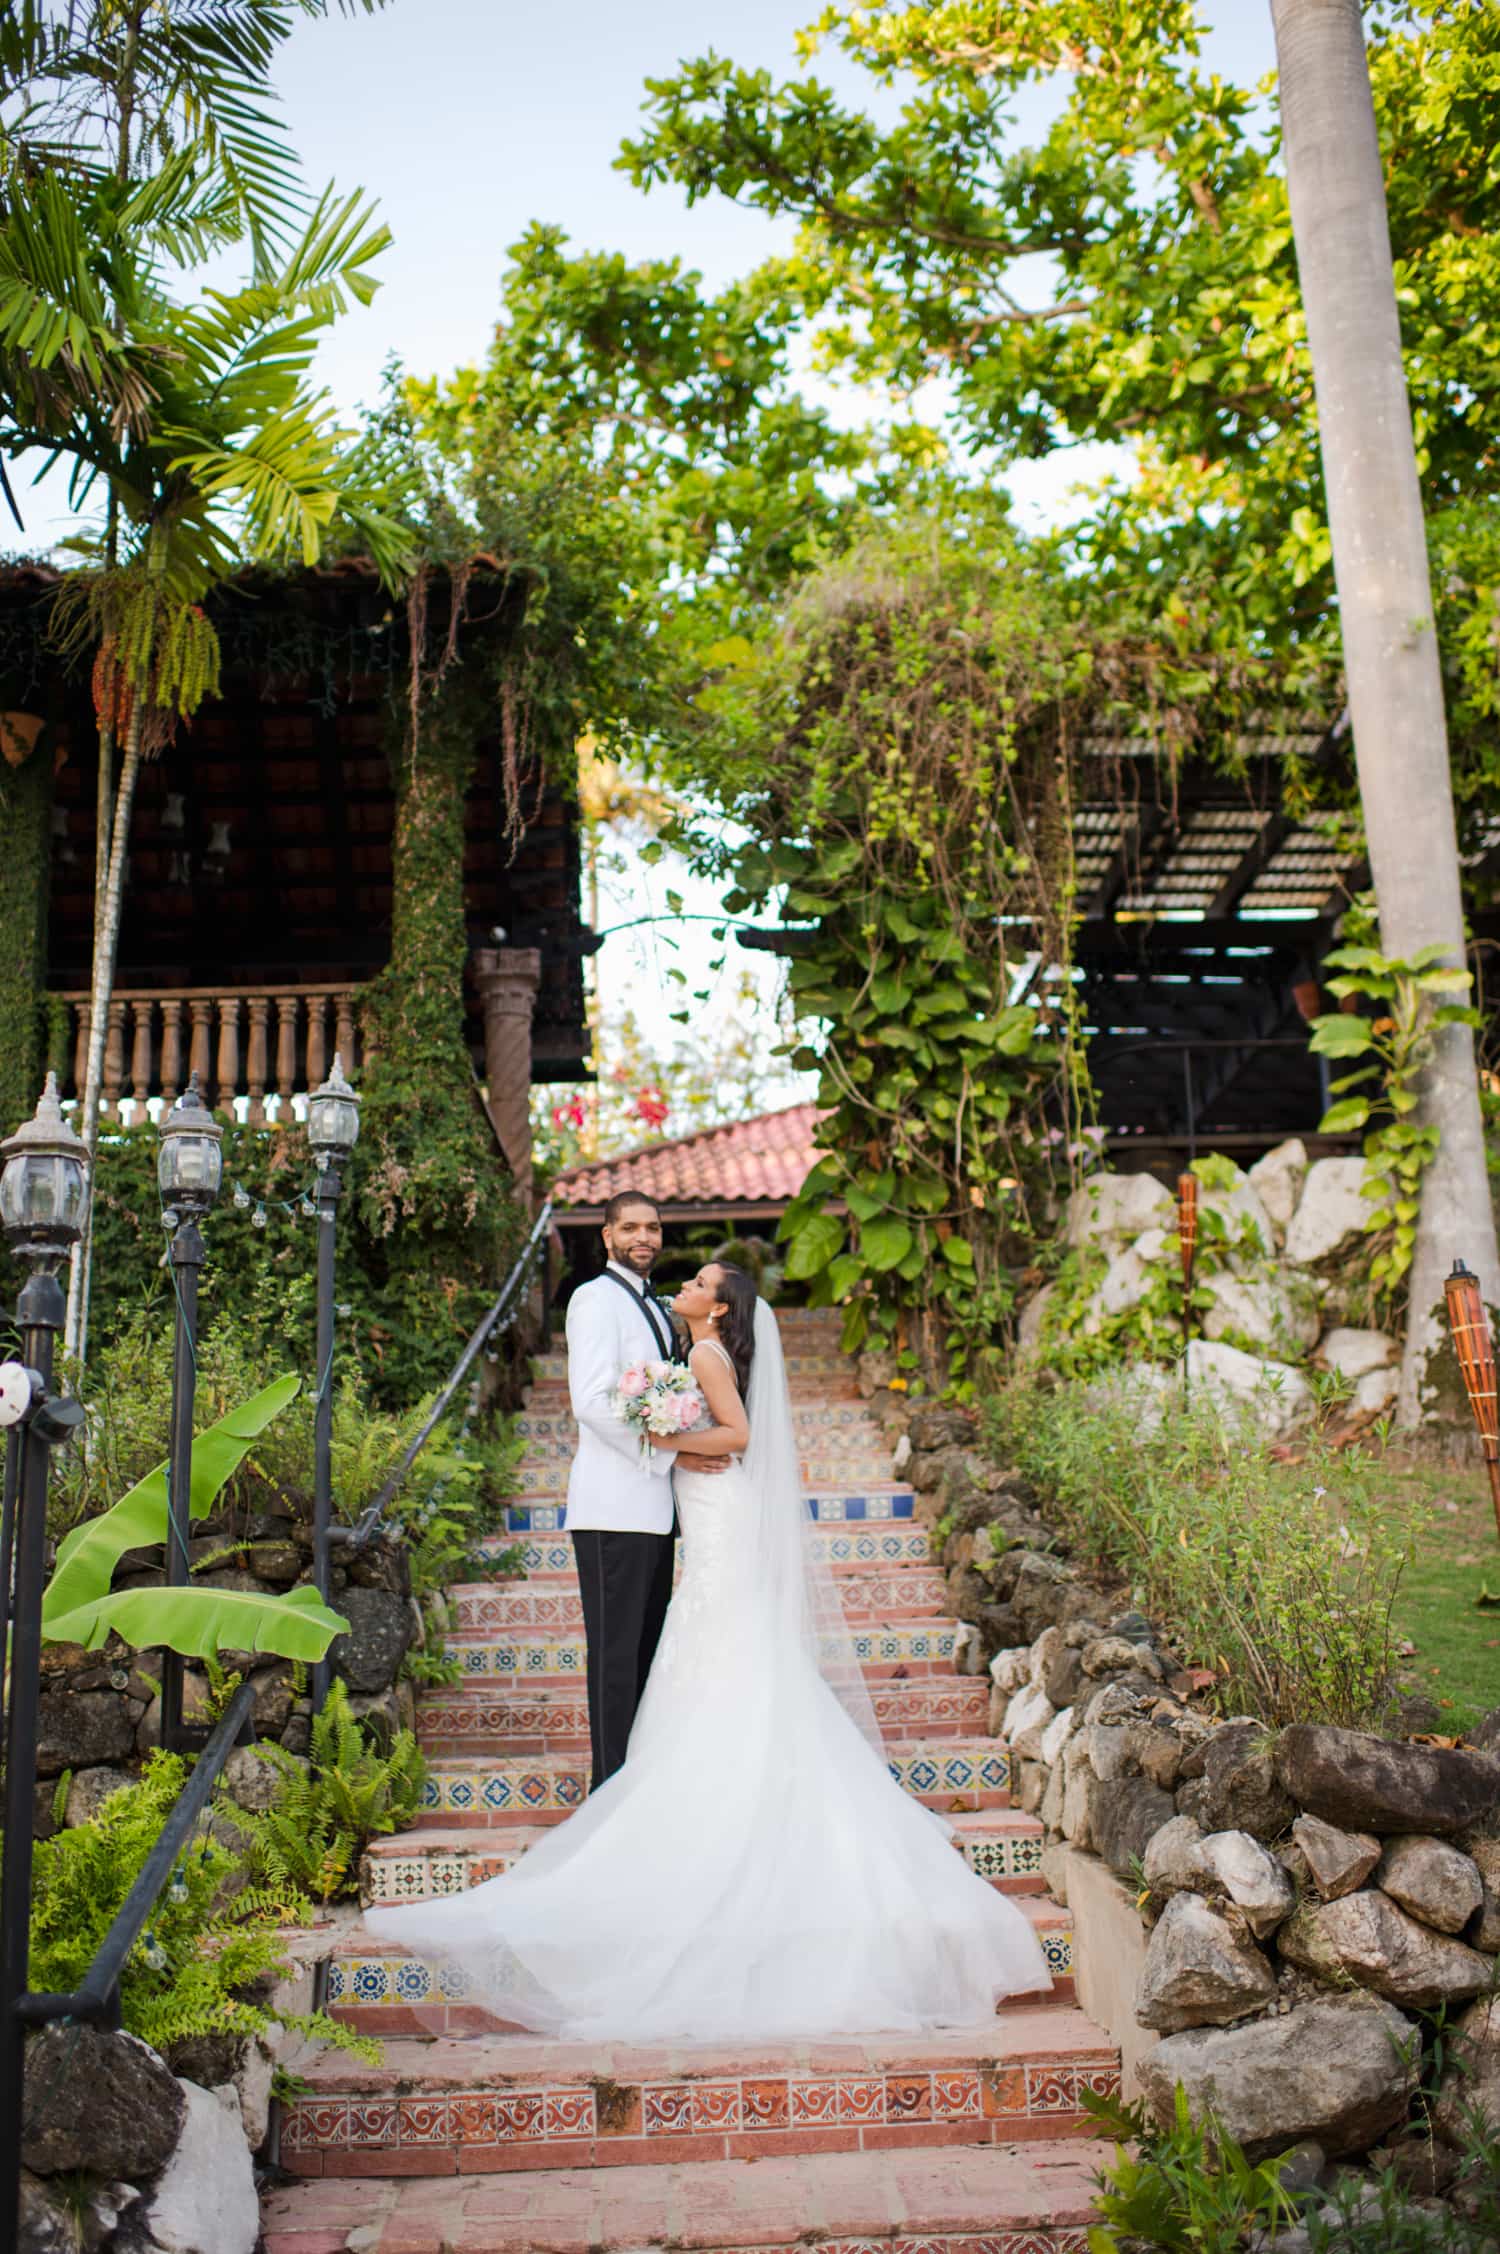 Caribbean rainforest elopement photos at Hacienda Siesta Alegre by Puerto Rico photographer Camille Fontanez